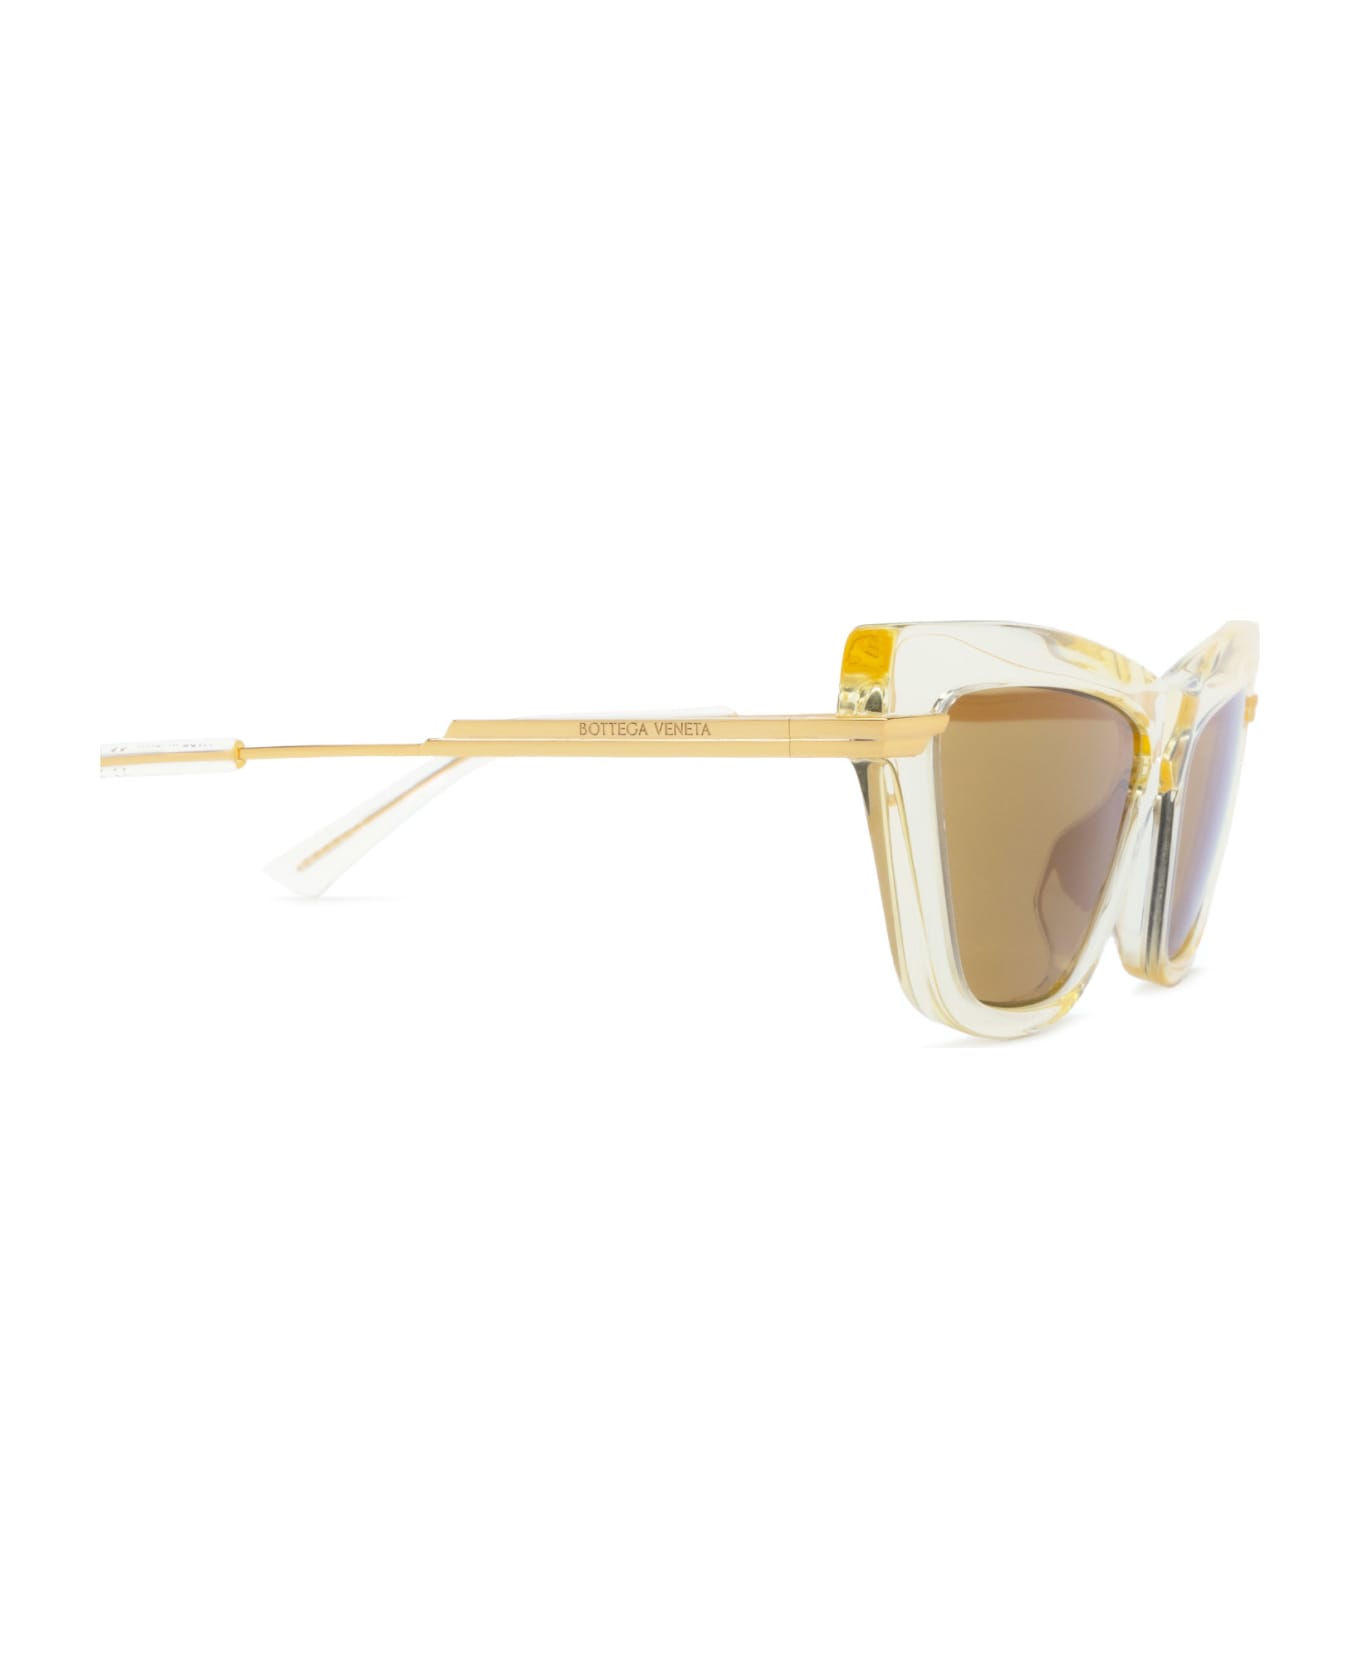 Bottega Veneta Eyewear Bv1241s Yellow Sunglasses - Yellow サングラス